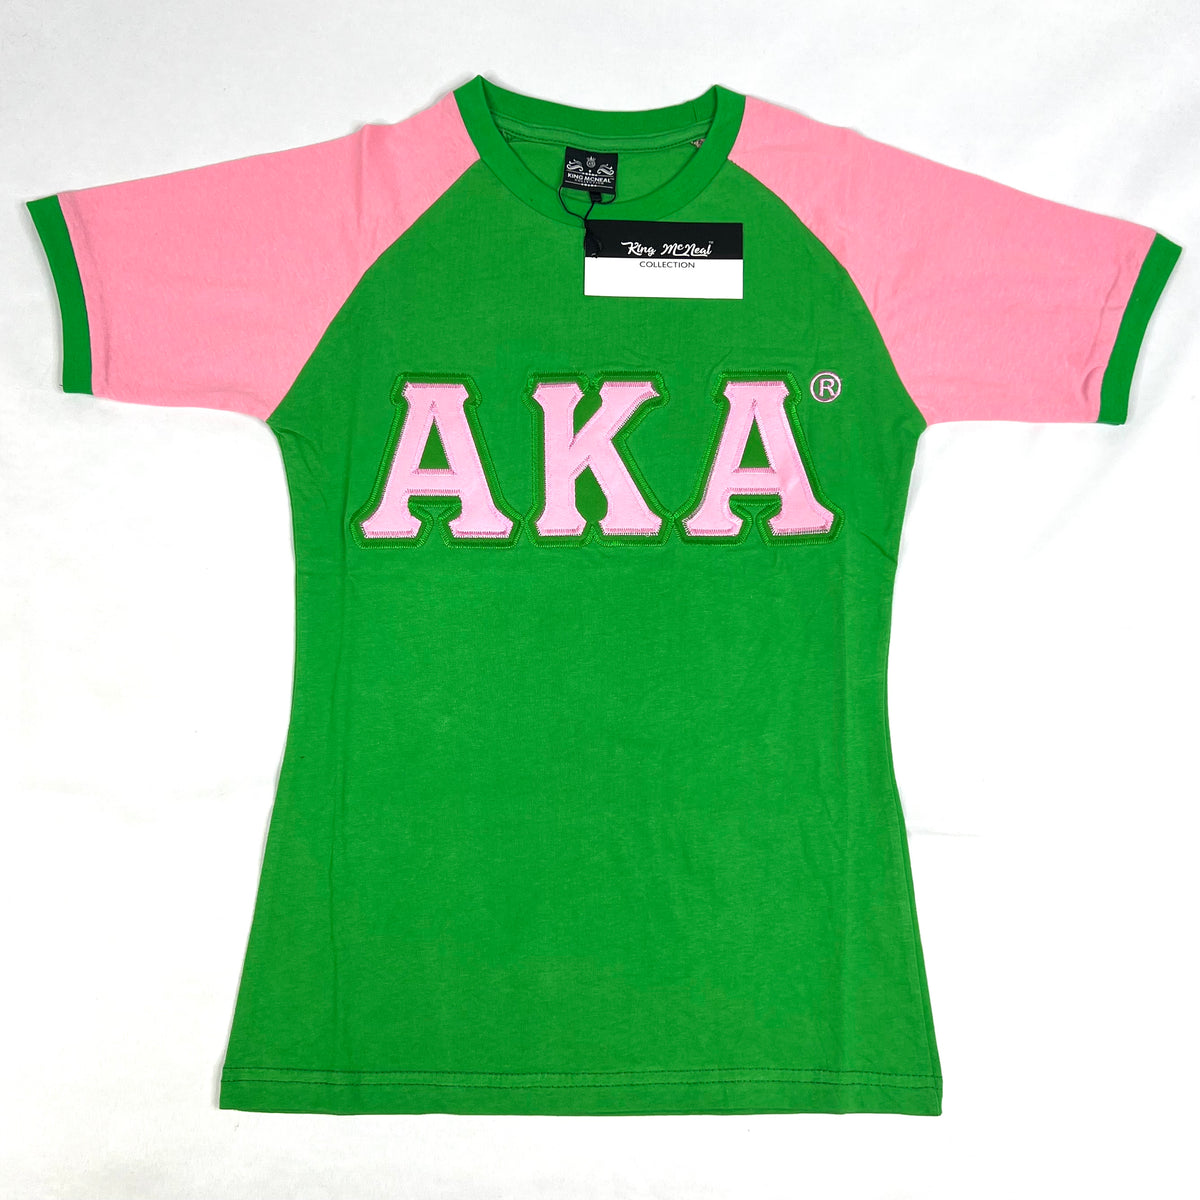 AKA Pink/Green Premium Raglan Shirt – The King McNeal Collection